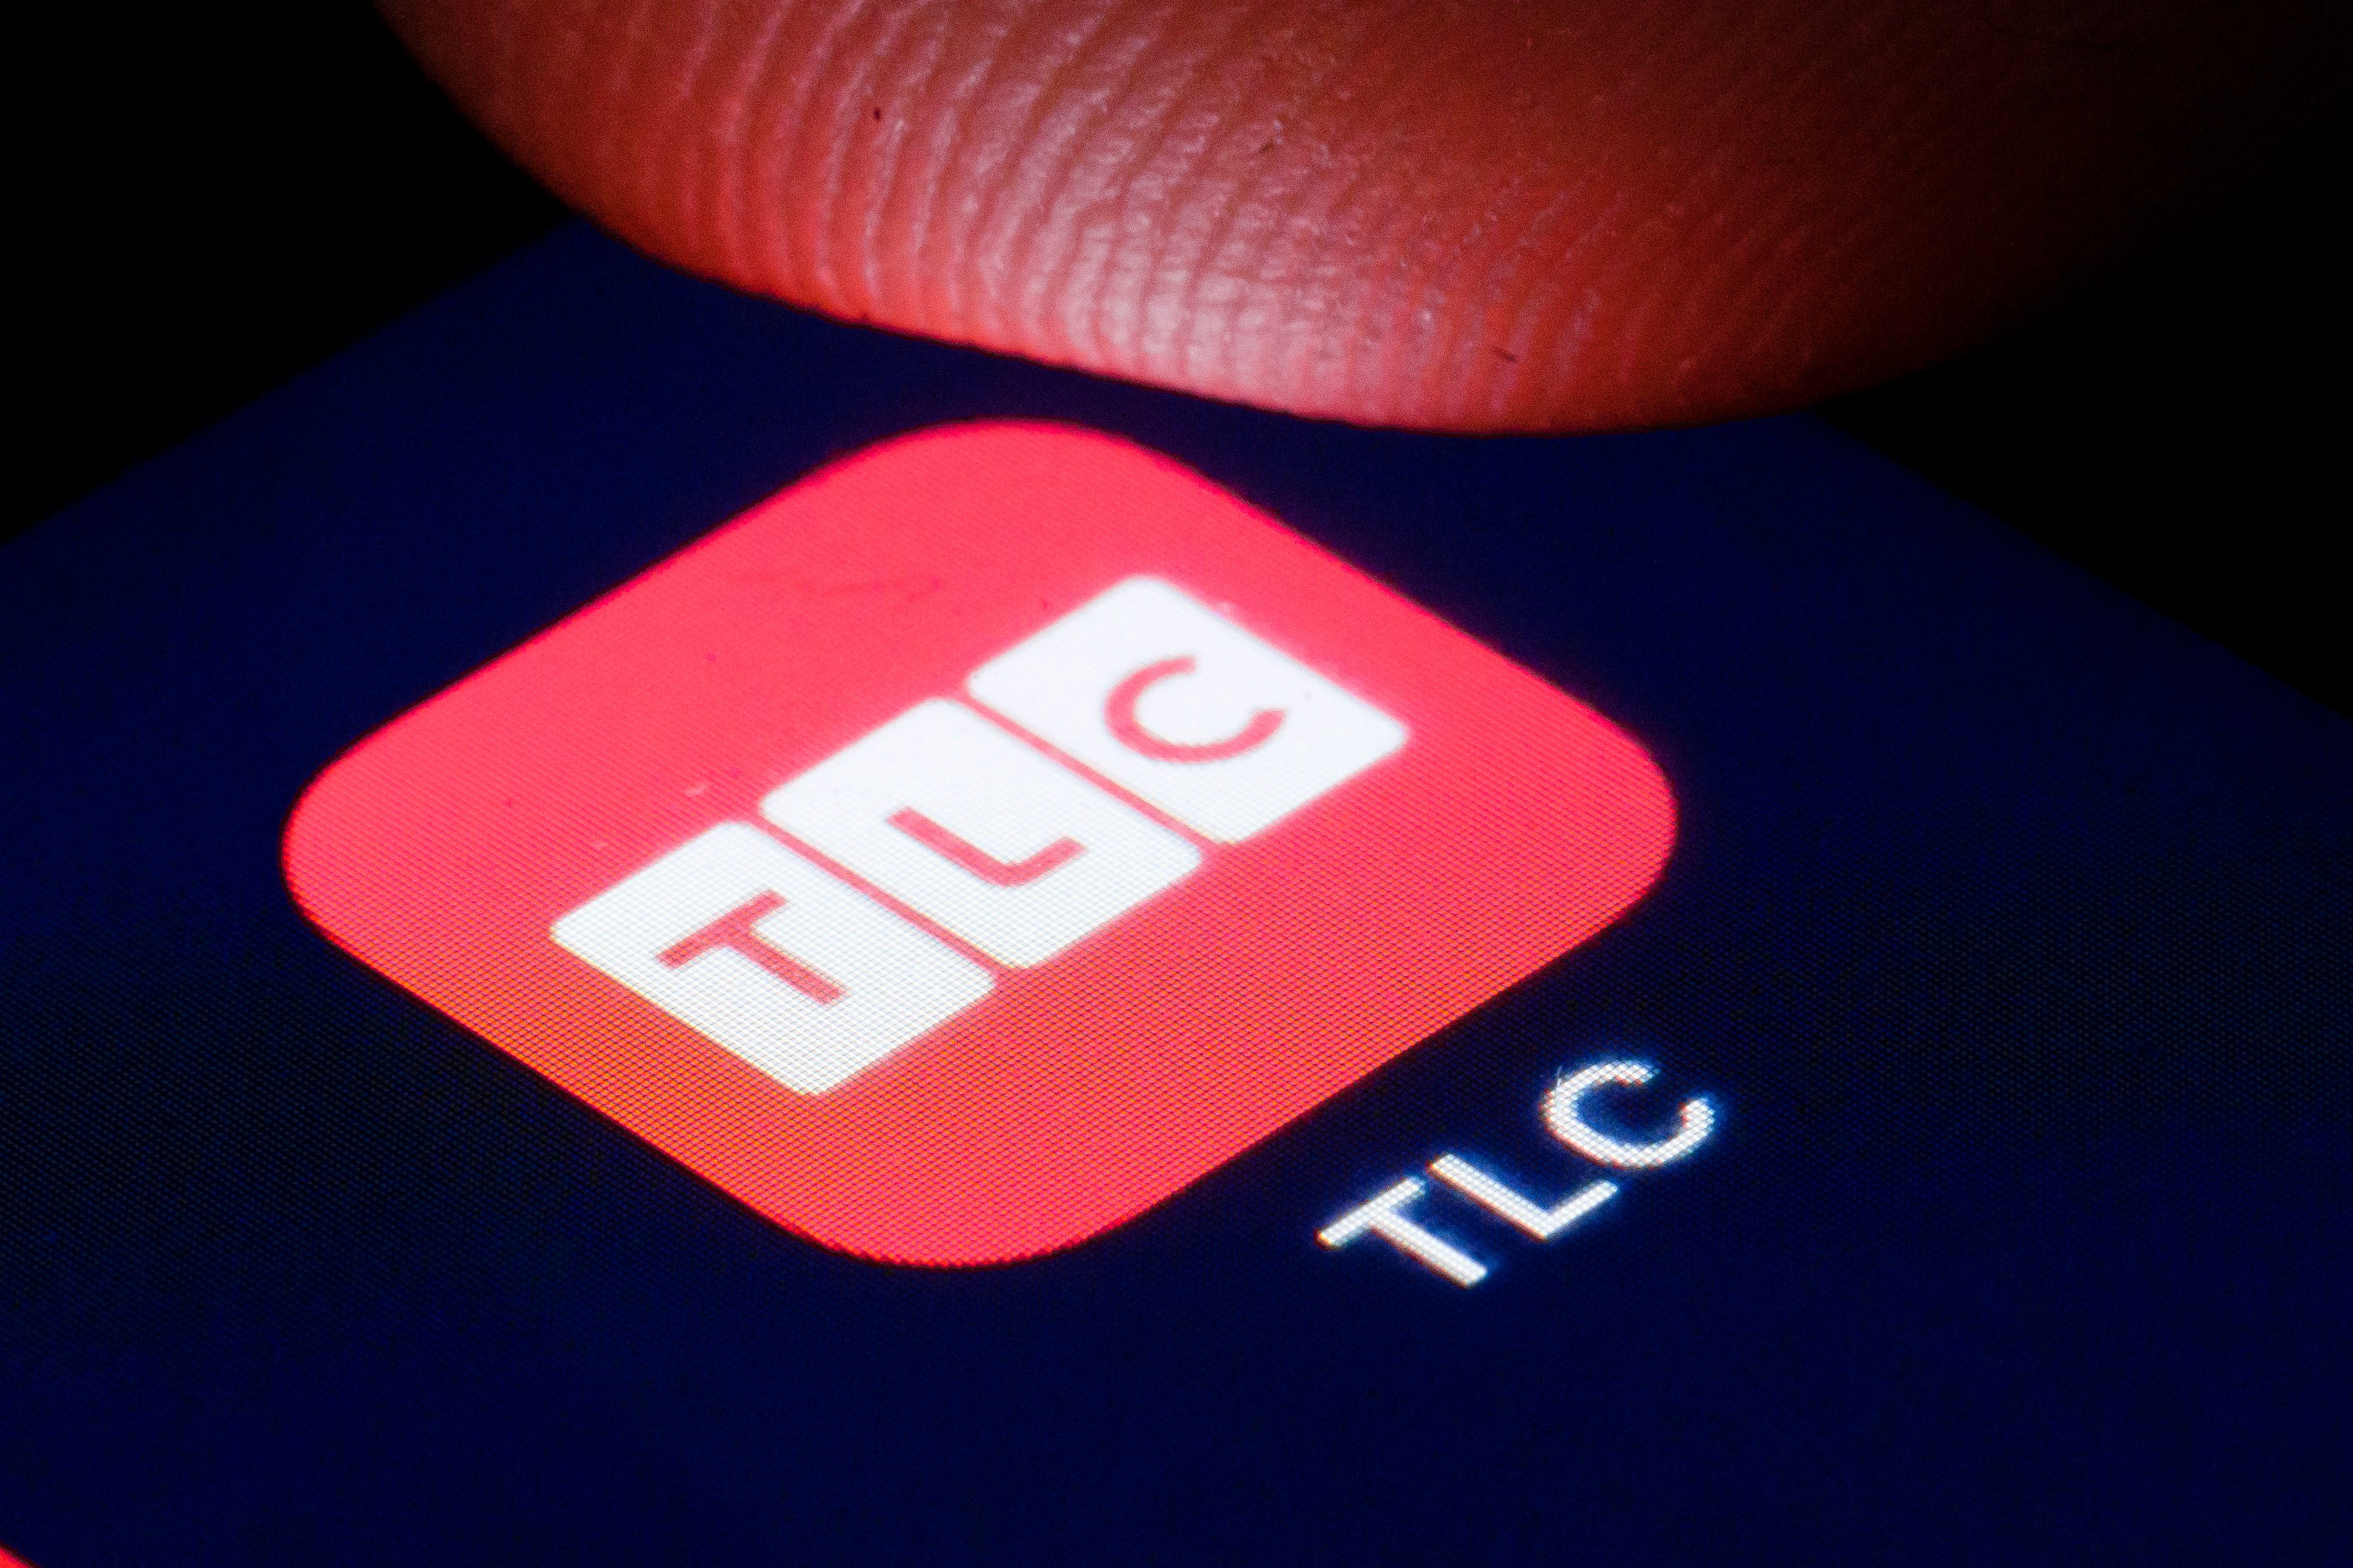 TLC logo on a smartphone